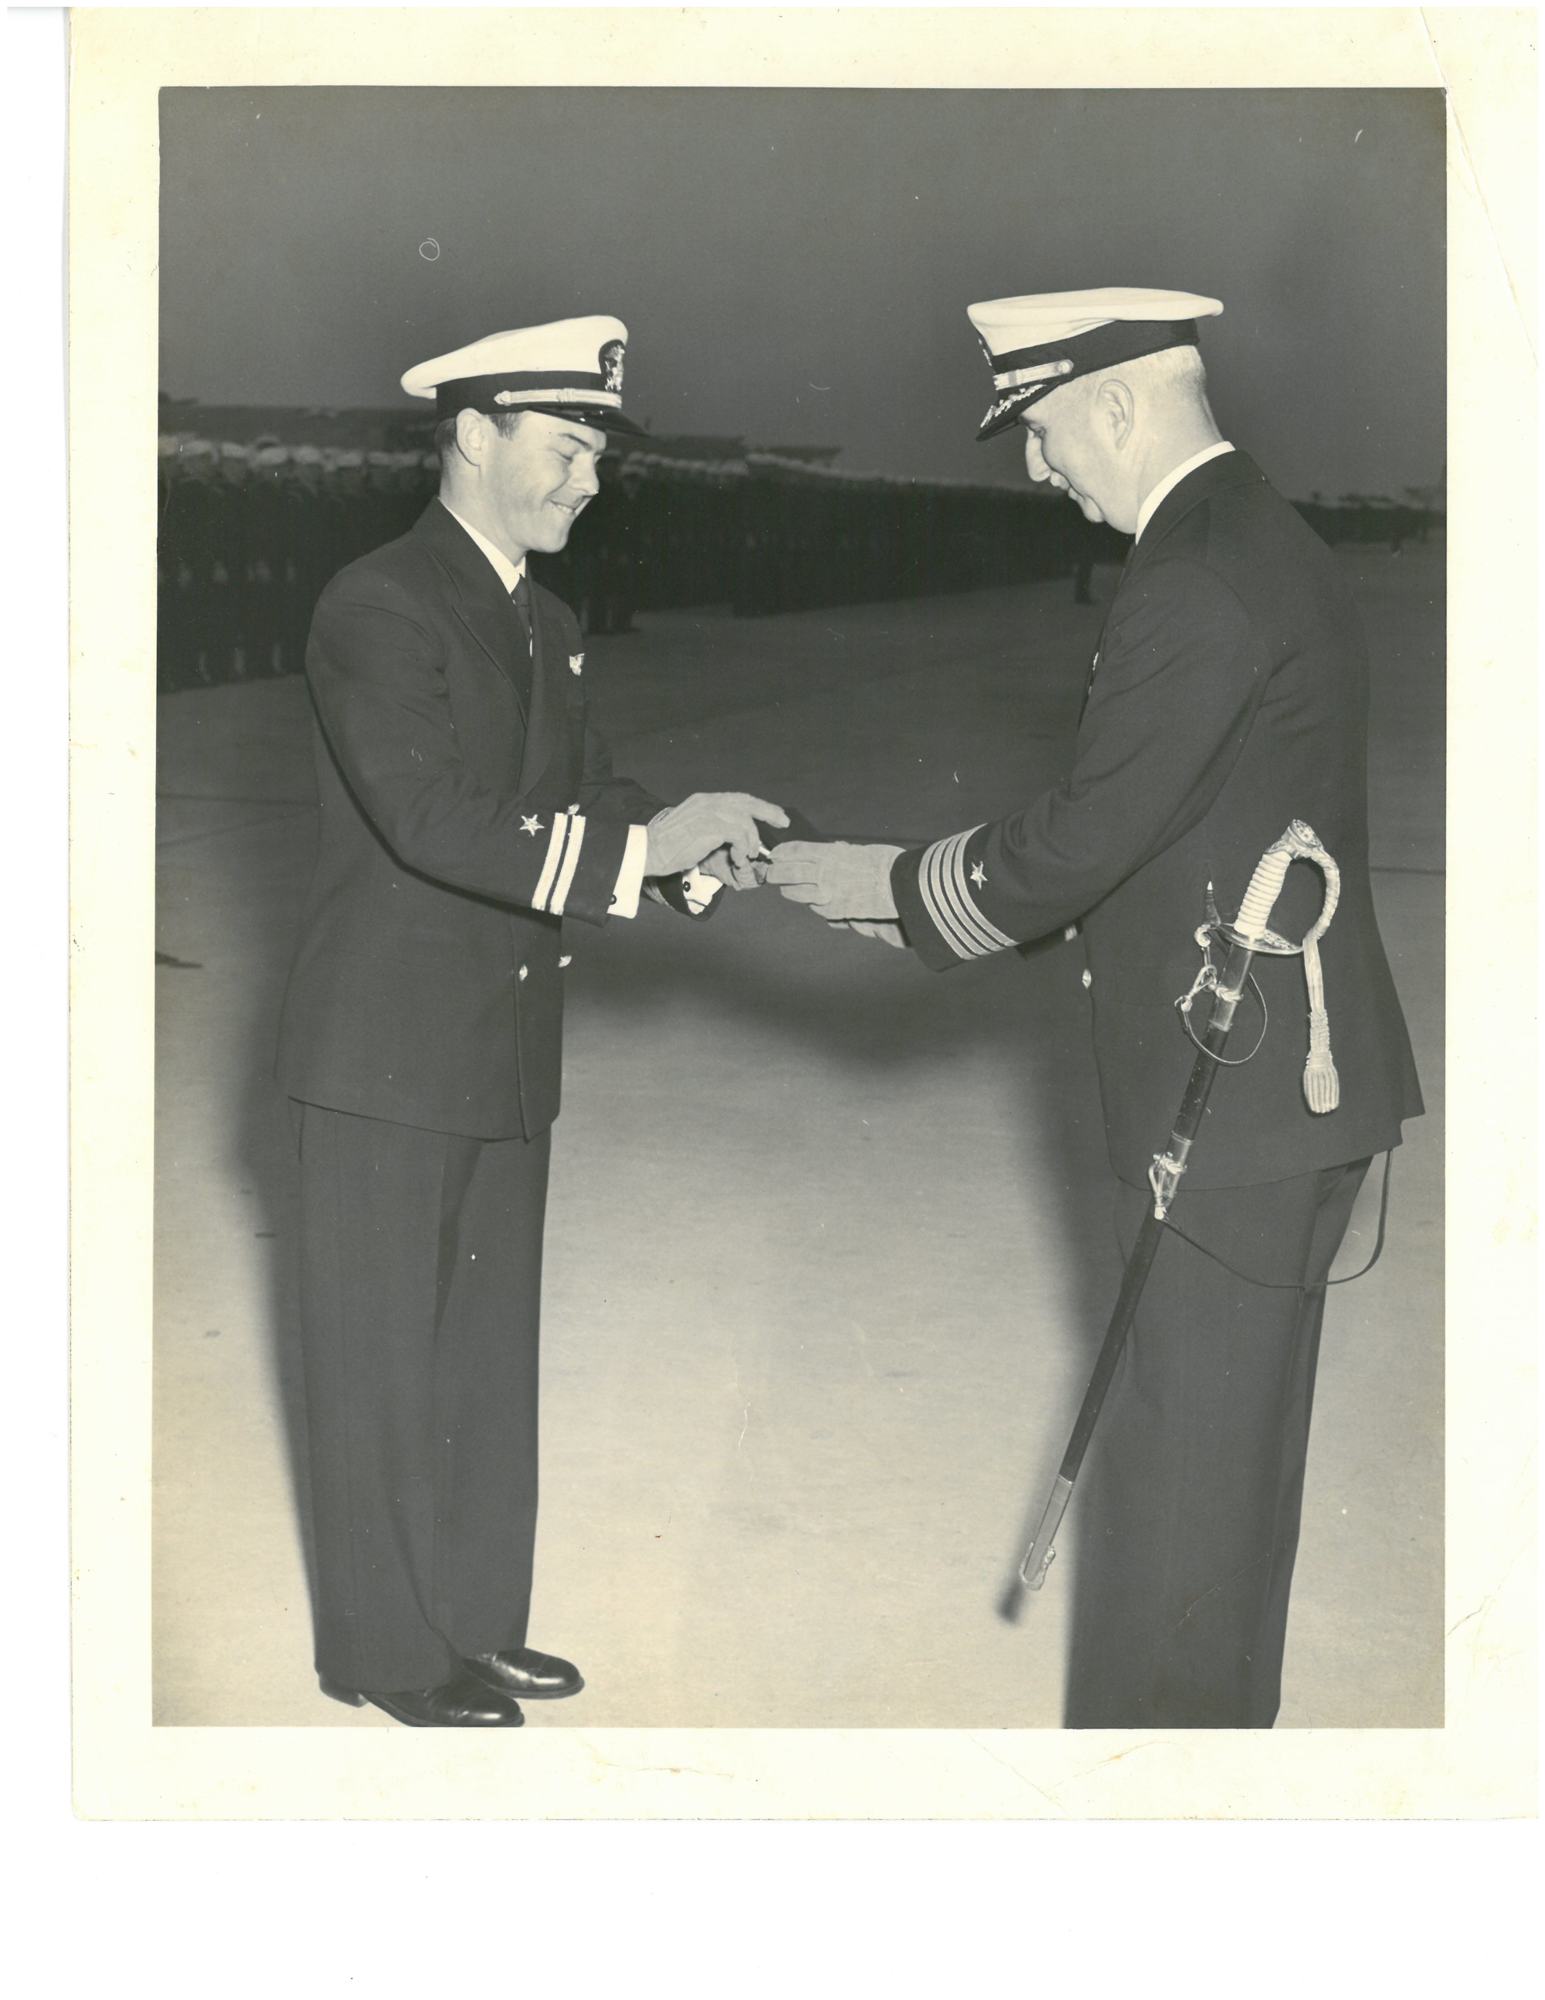 Lt. Gordon Bolser receives his Navy Cross from Capt. Mason in April 1942. Photo courtesy of Shannon Gault.